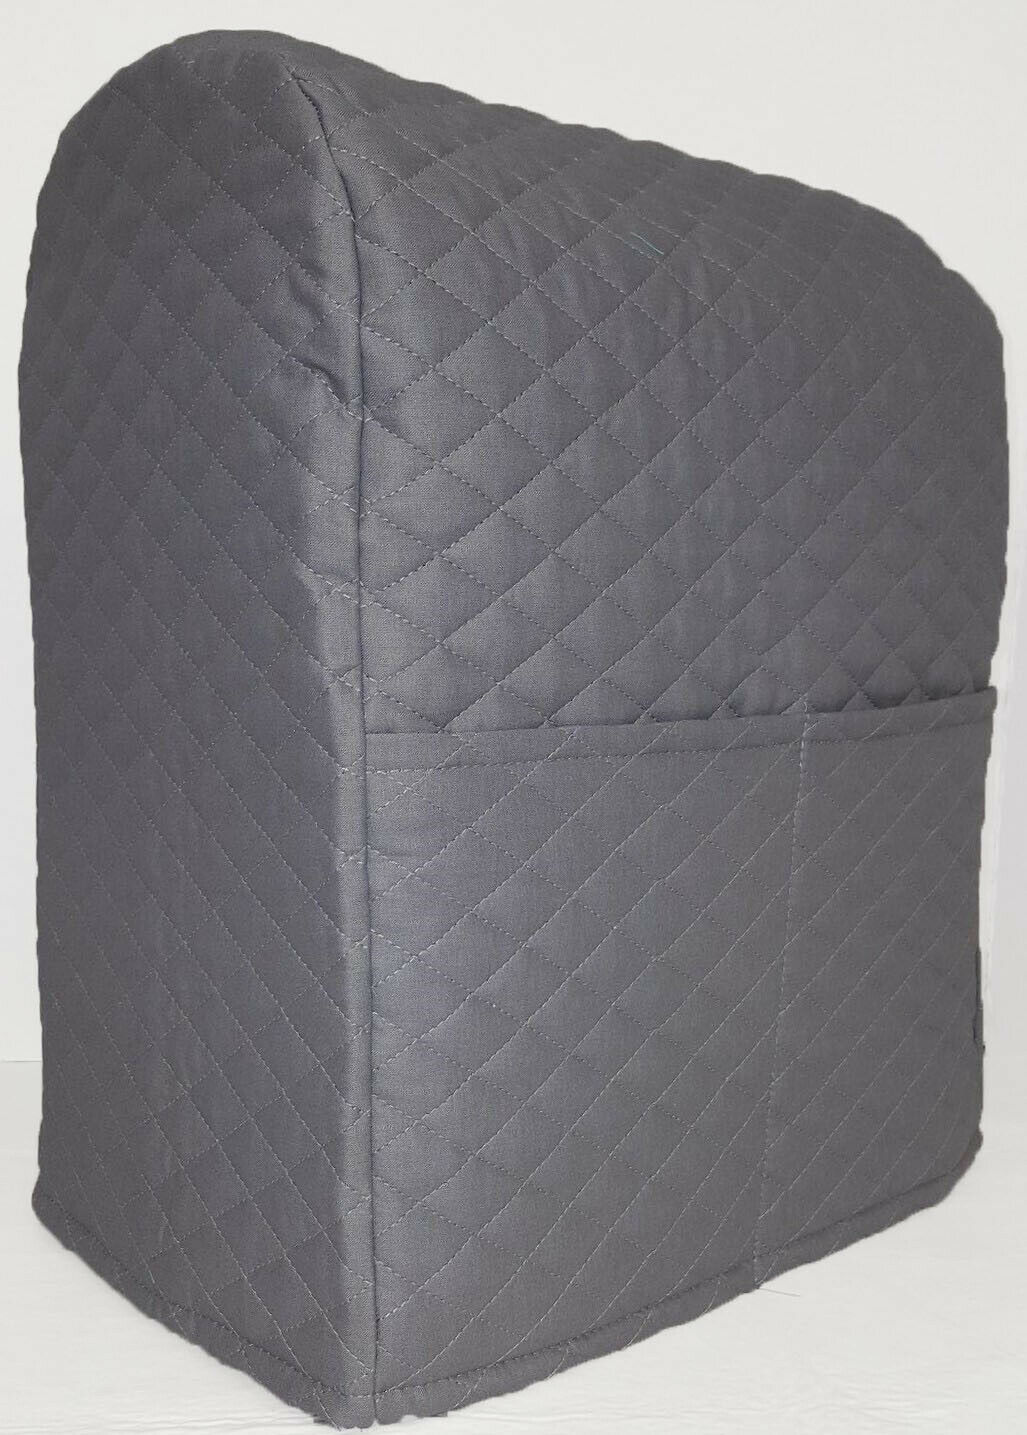 Storage Bag with Pockets Compatible with KitchenAid Tilt Head /& Bowl Lift Models HOMEST Stand Mixer Dust Cover Floral, Fit for Tilt Head 4.5-5 Quart